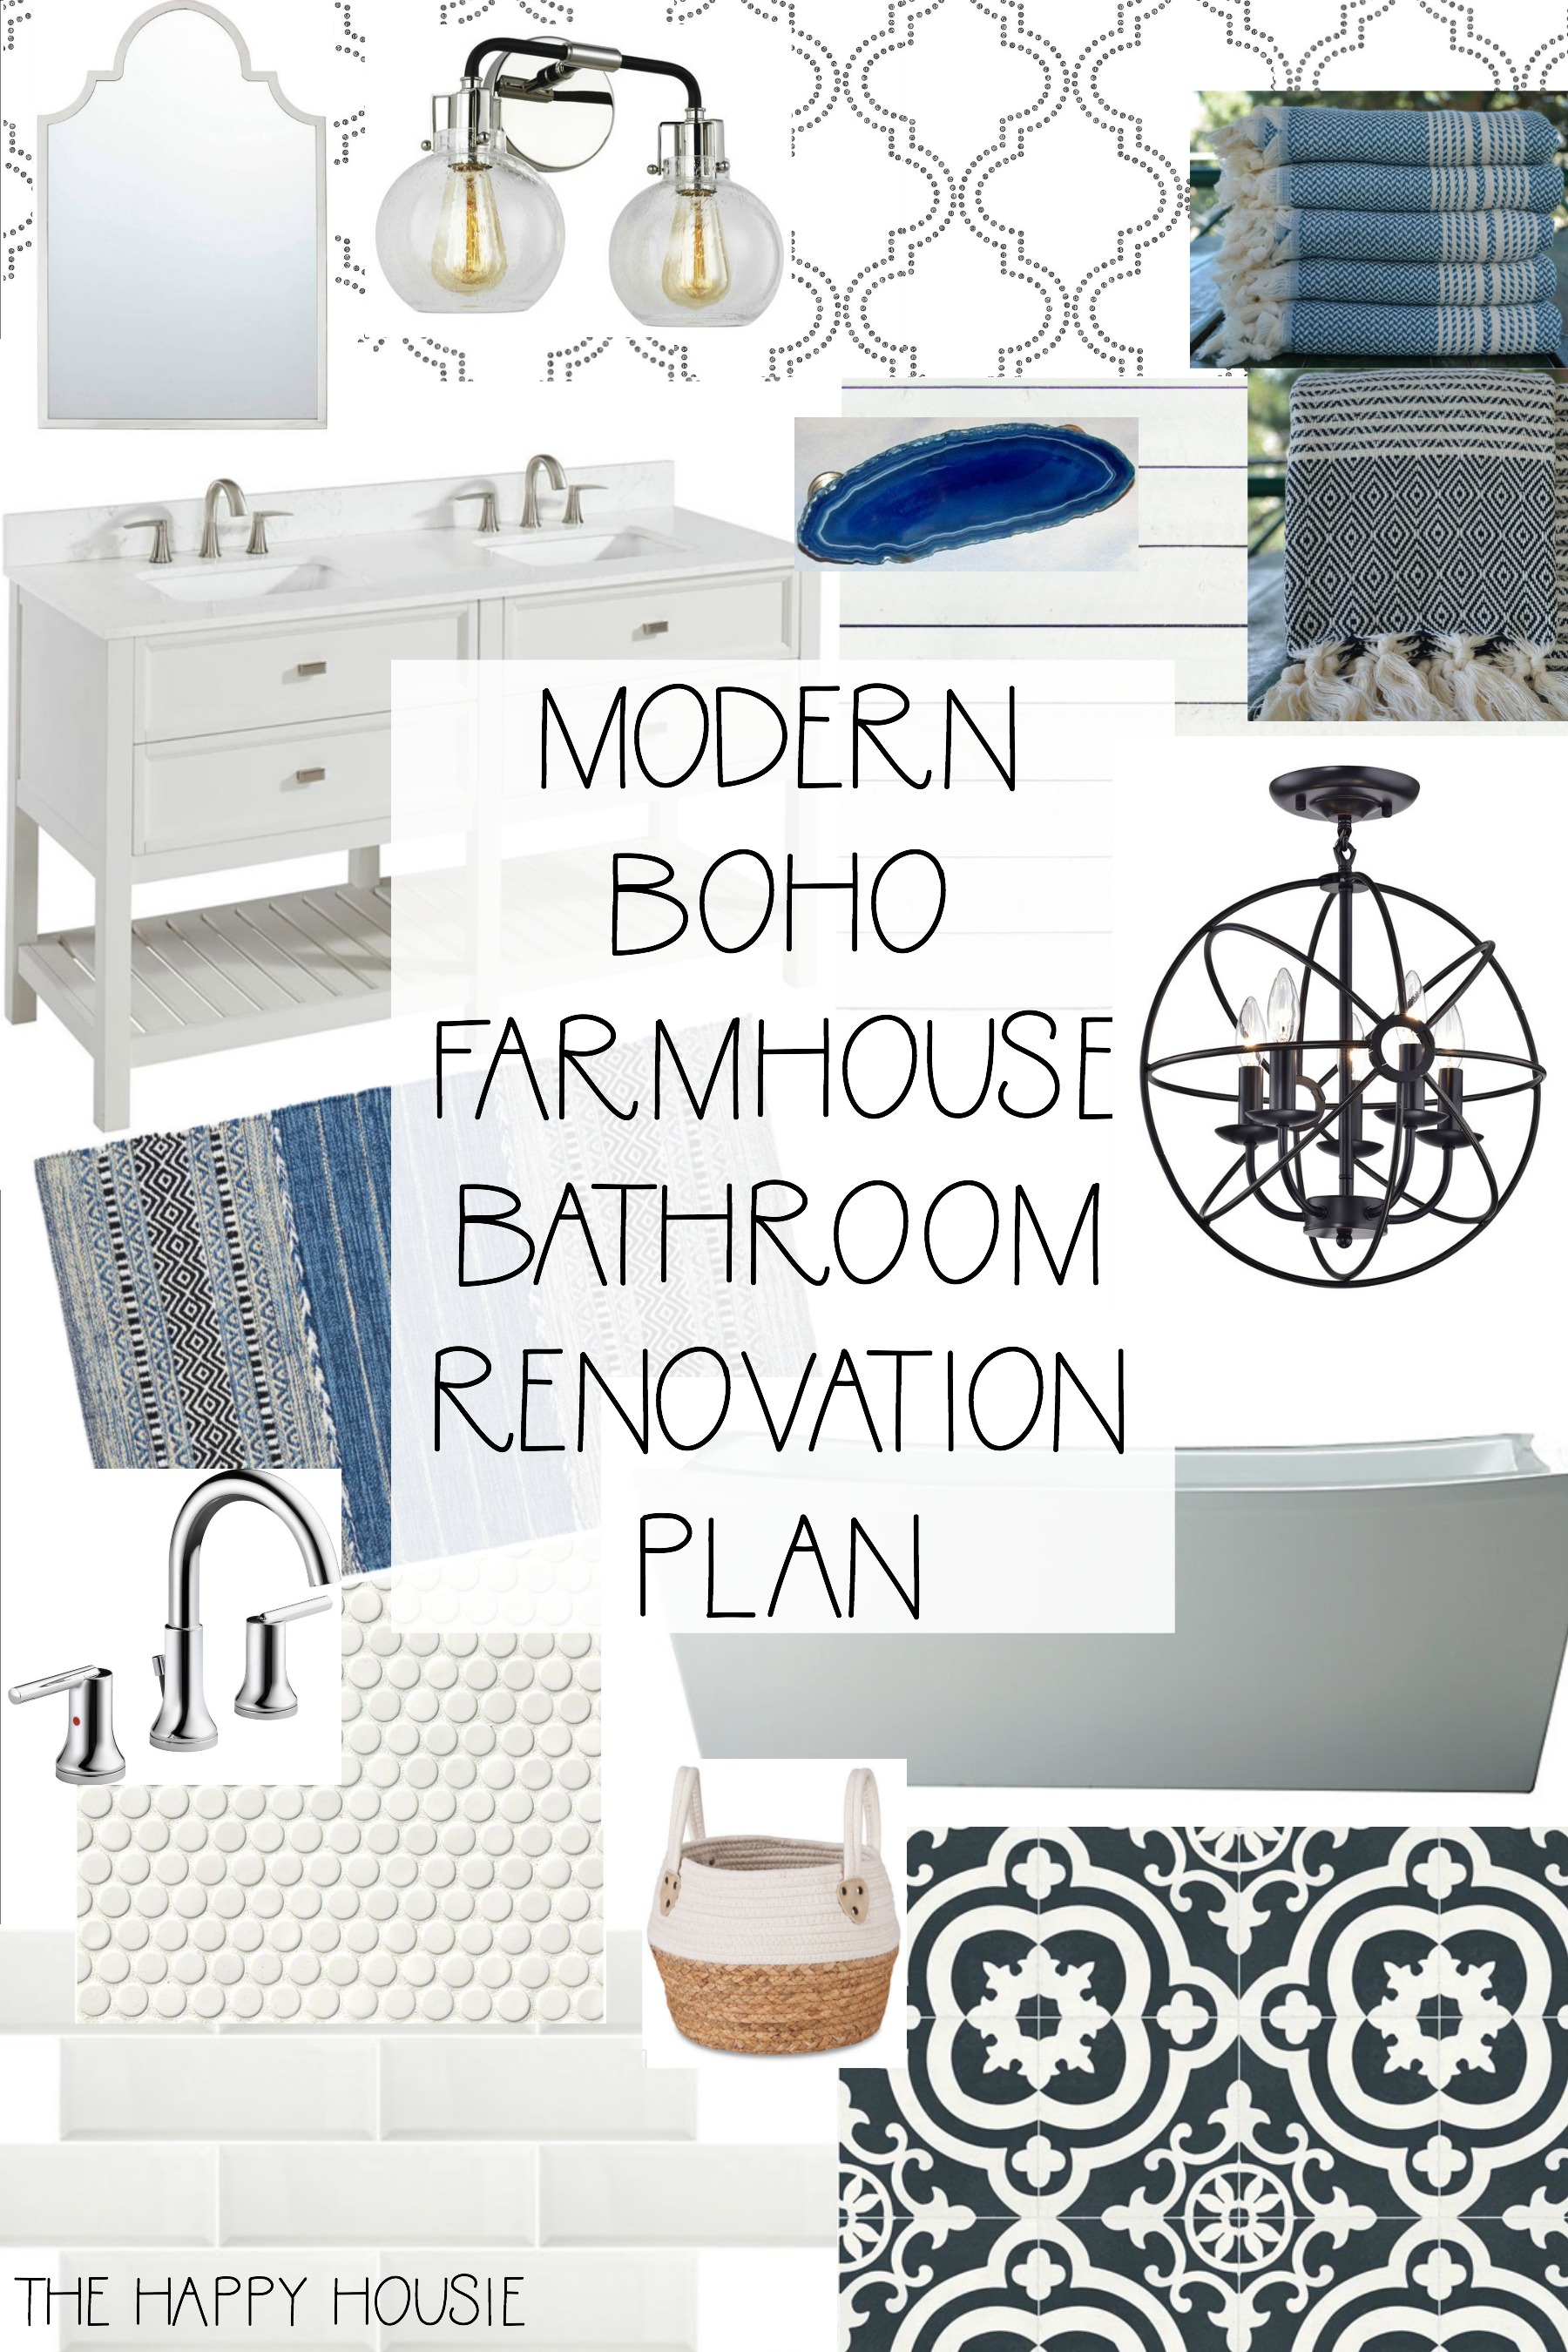 Modern Boho Farmhouse Bathroom Renovation Plan poster.